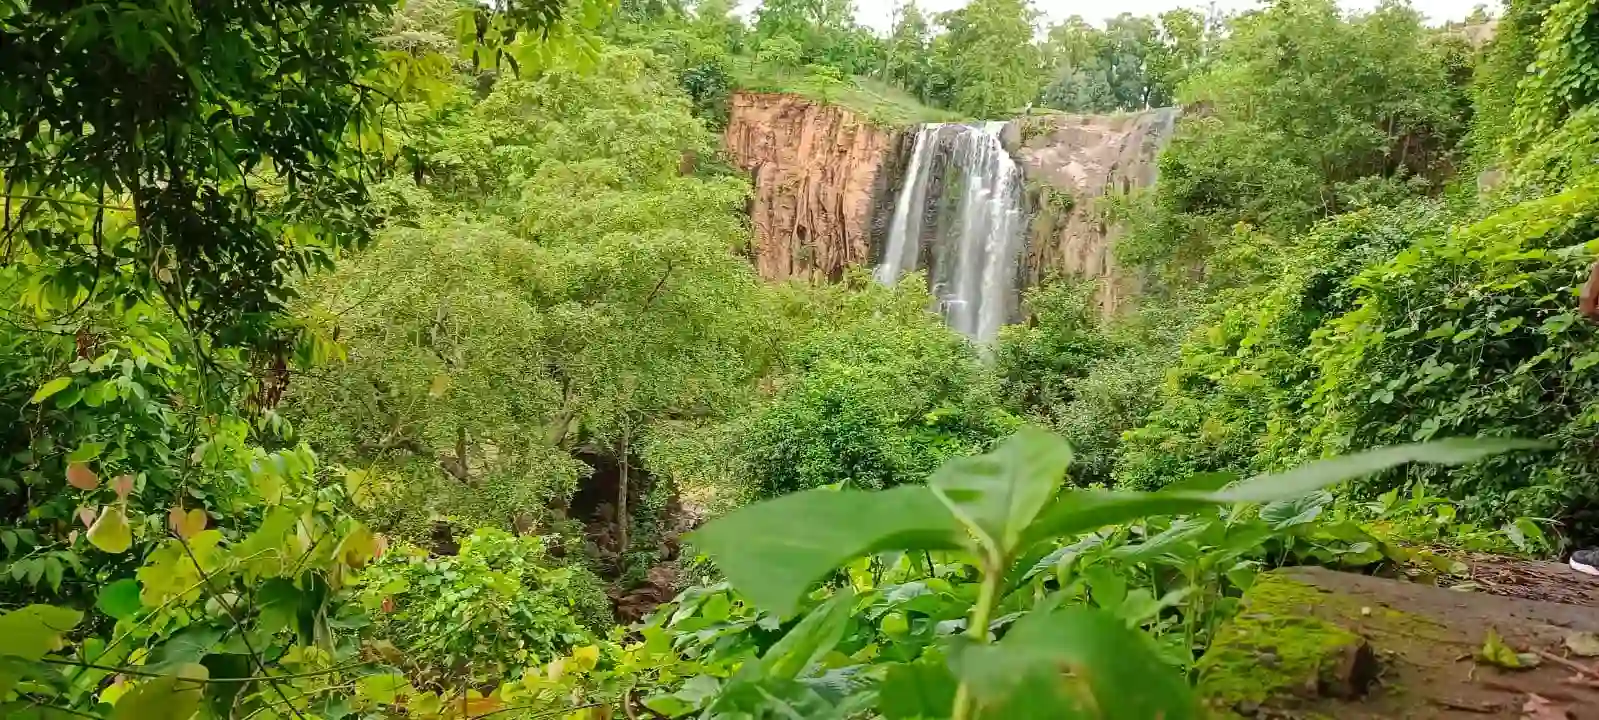 kendai waterfall